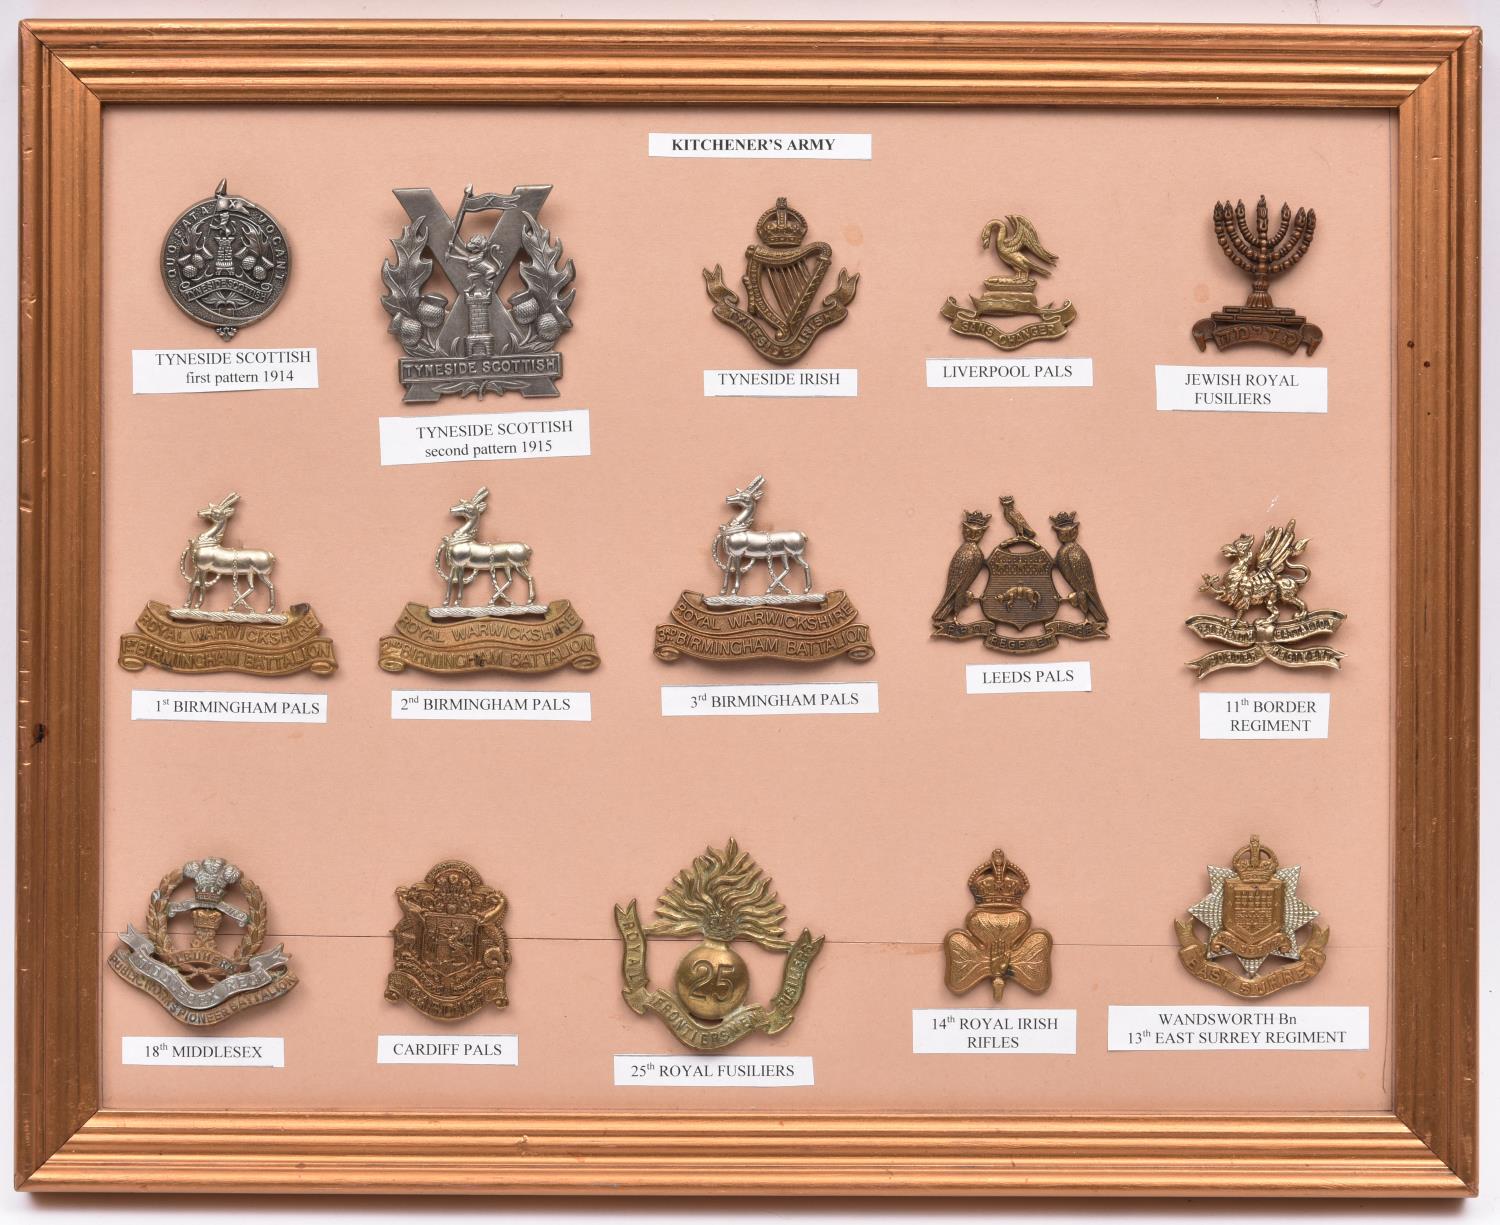 15 restrike mostly WWI “Kitchener’s Army” cap badges, including 1st type Tyneside Scottish, 1st 2nd,